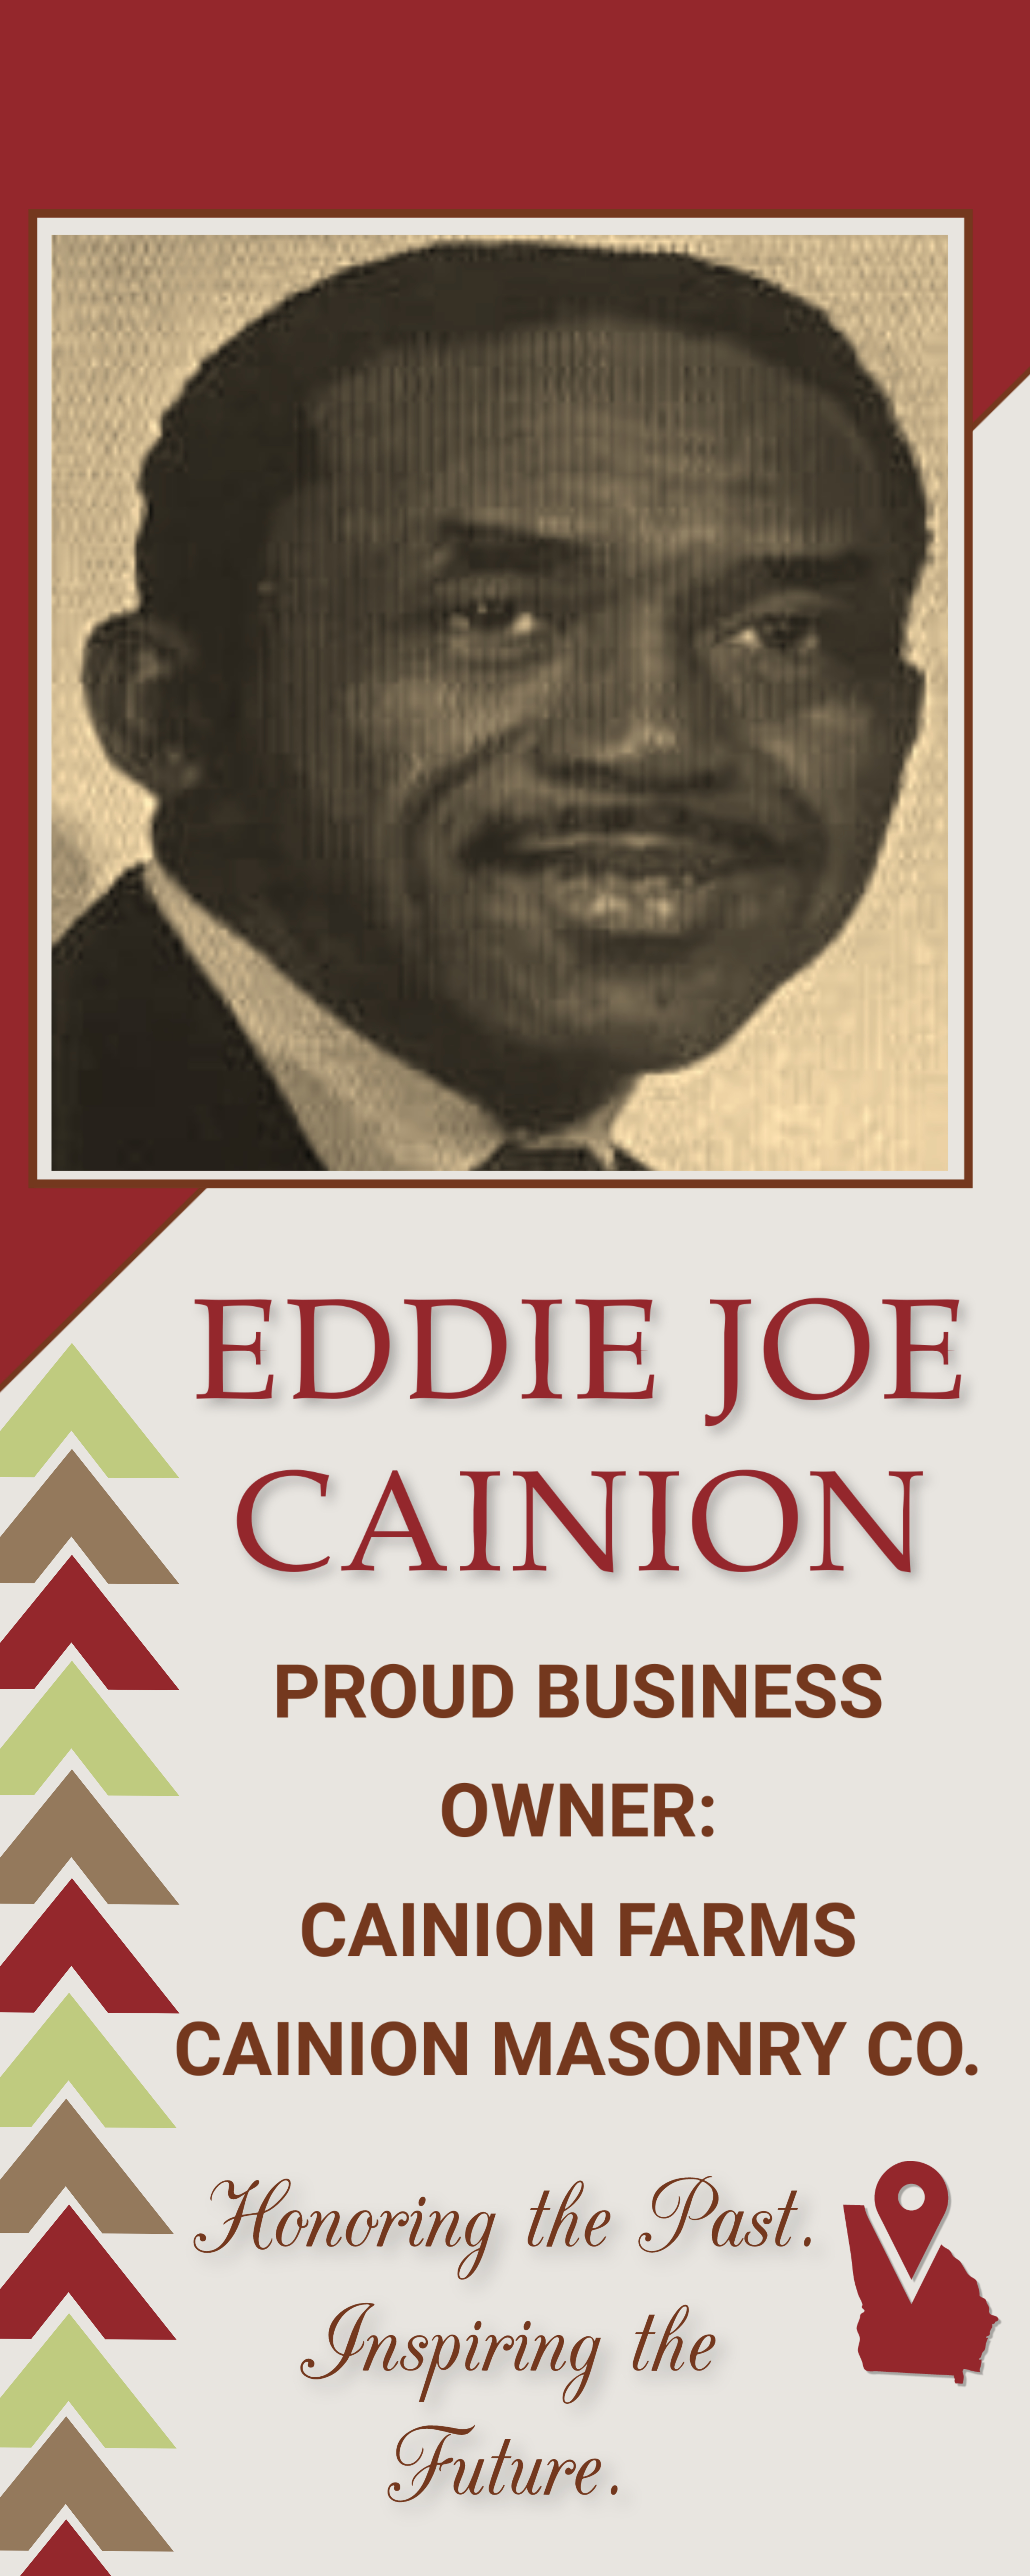 Eddie Joe Cainion